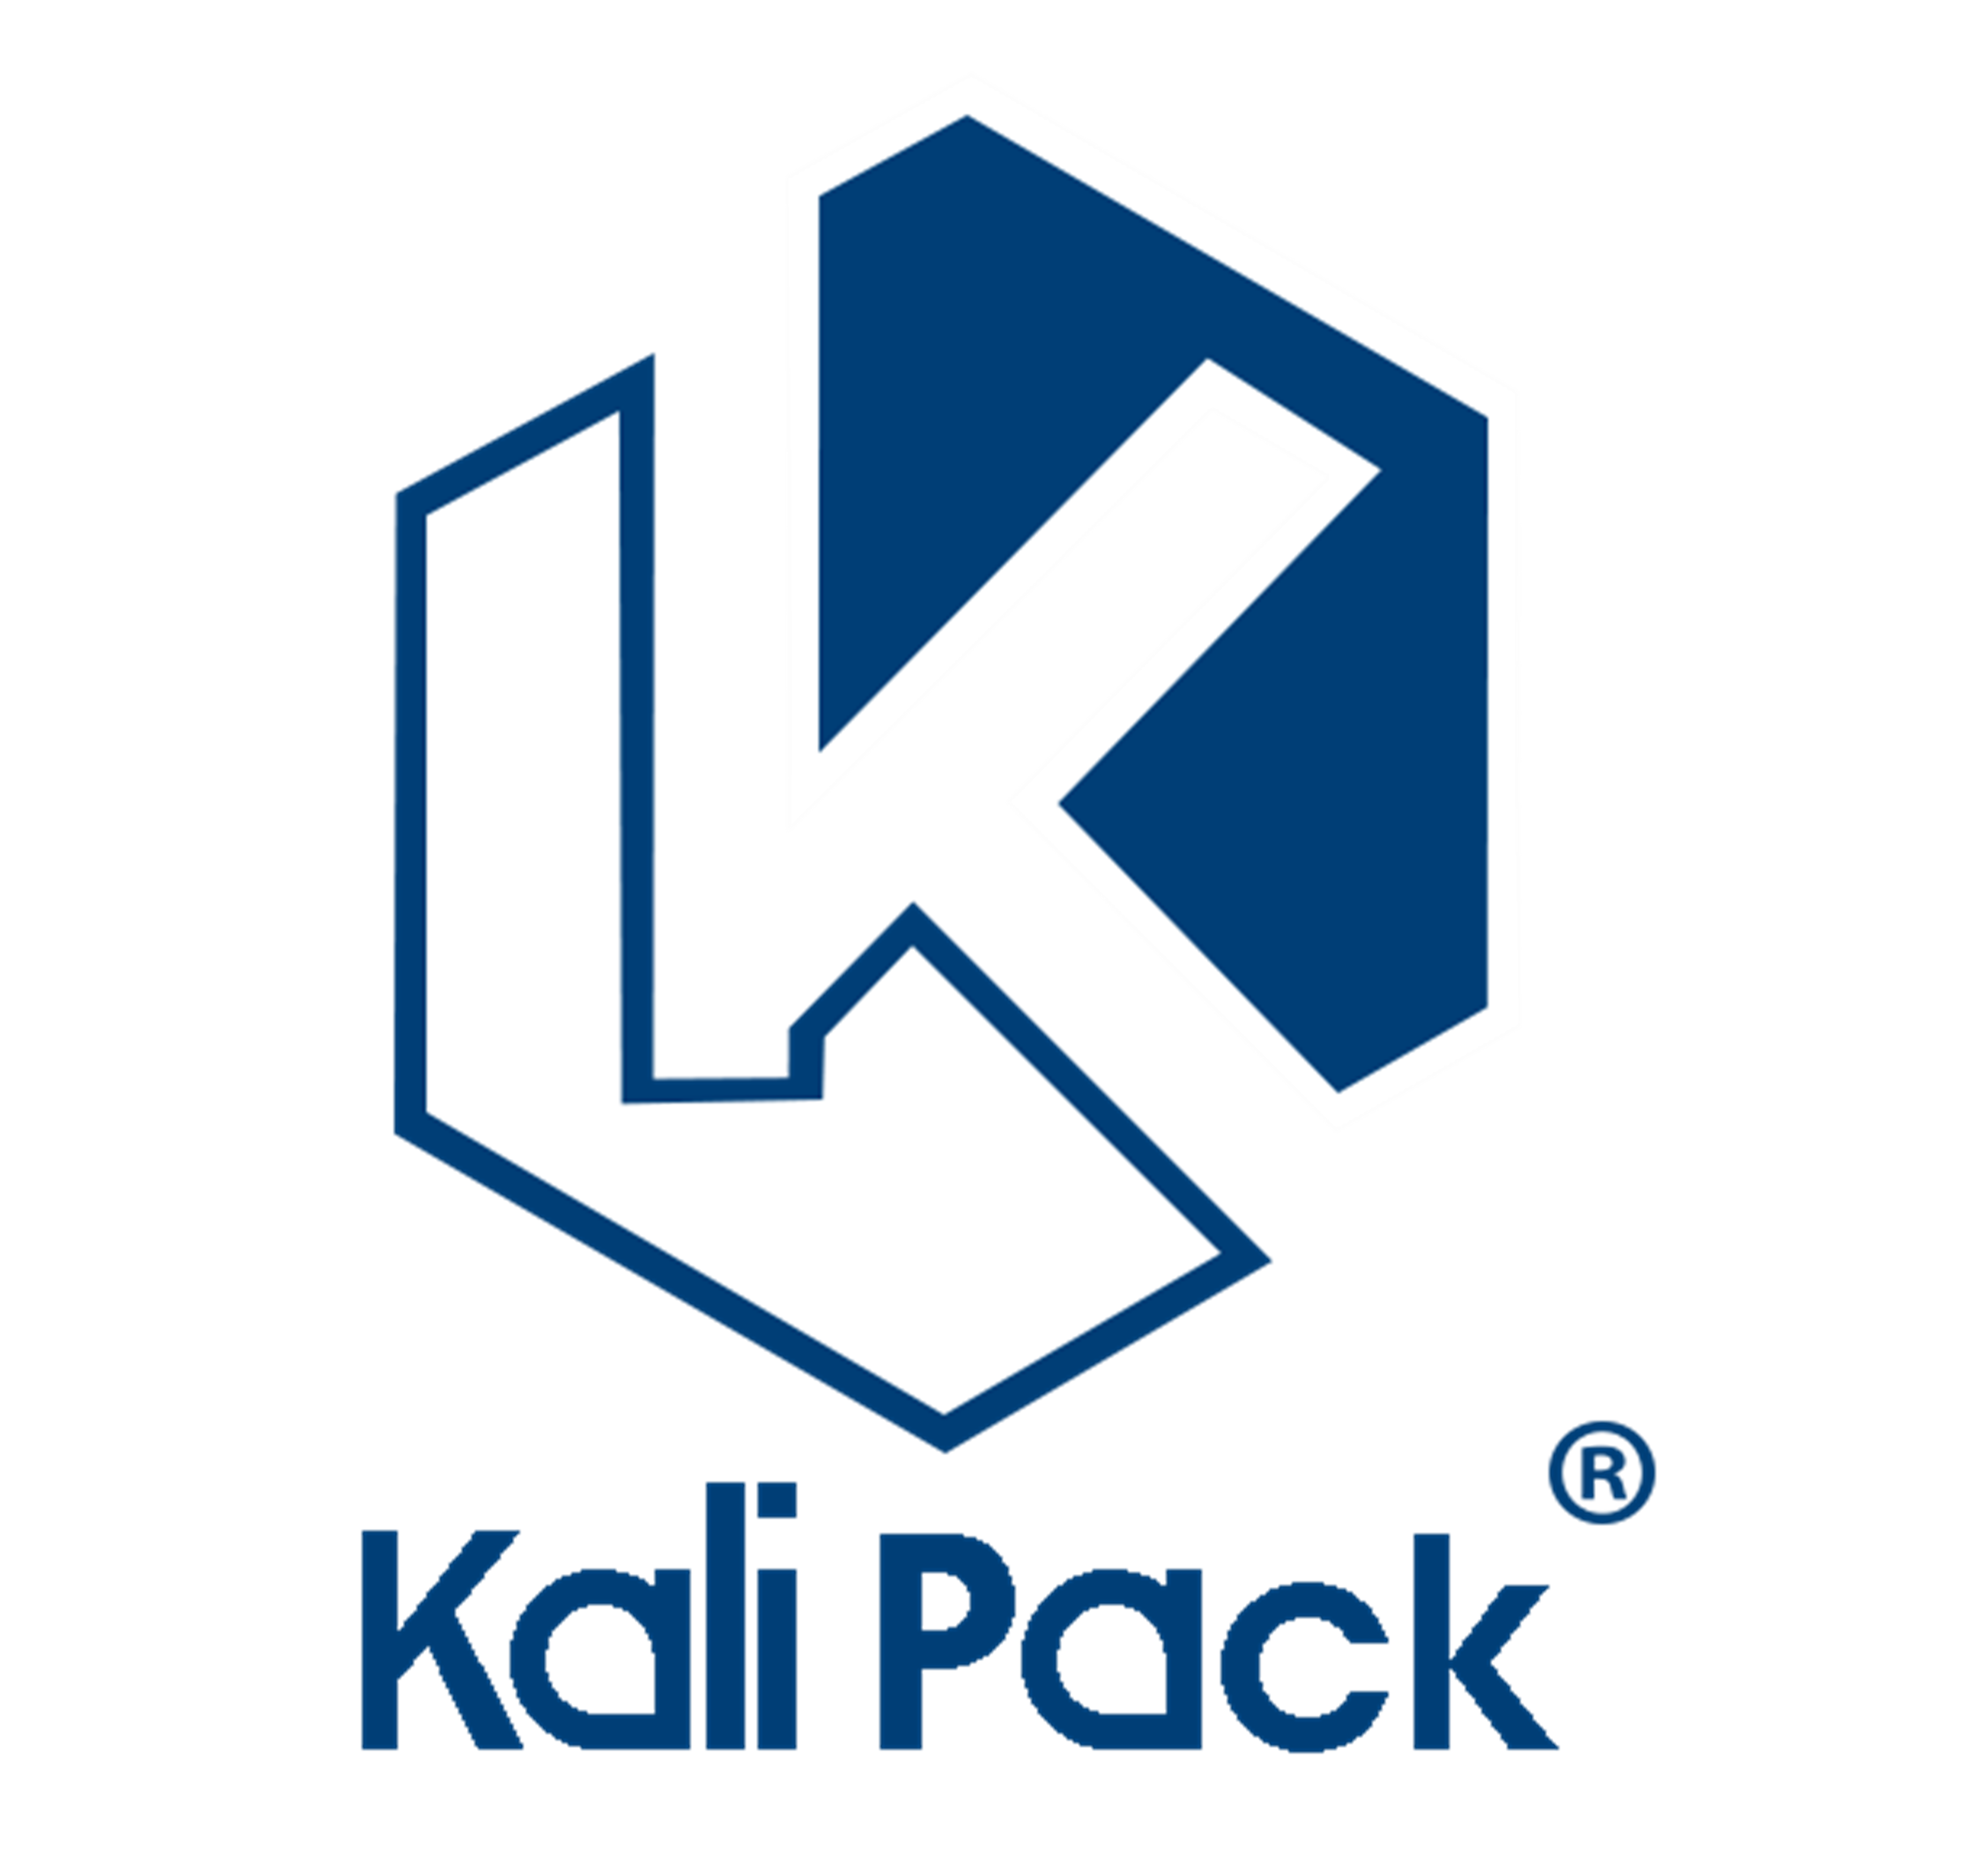 KaliPack